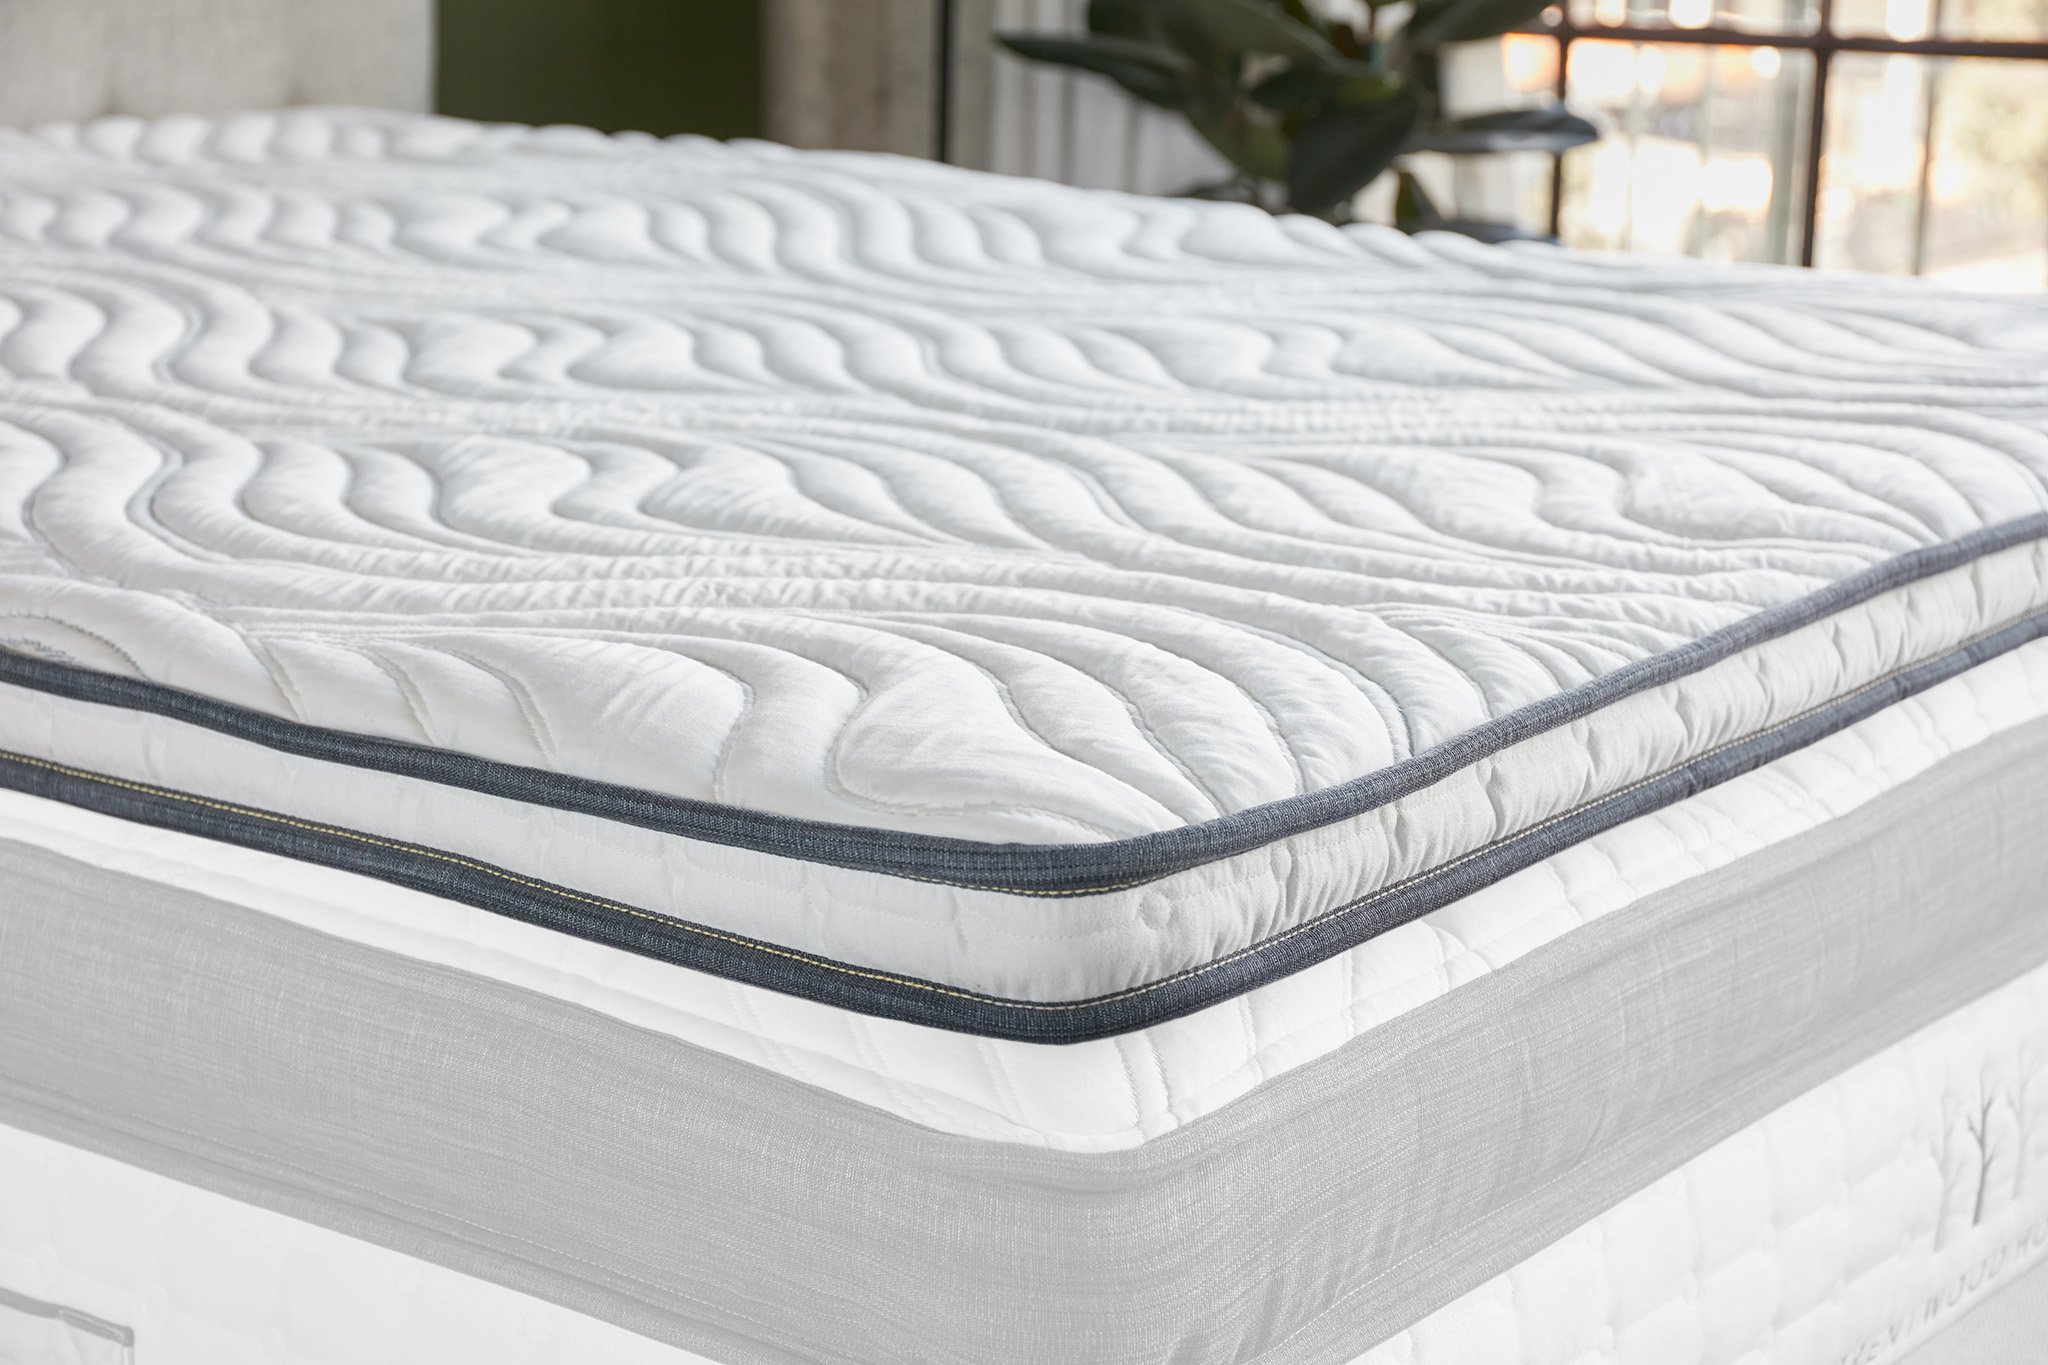 mattress be topper memory foam